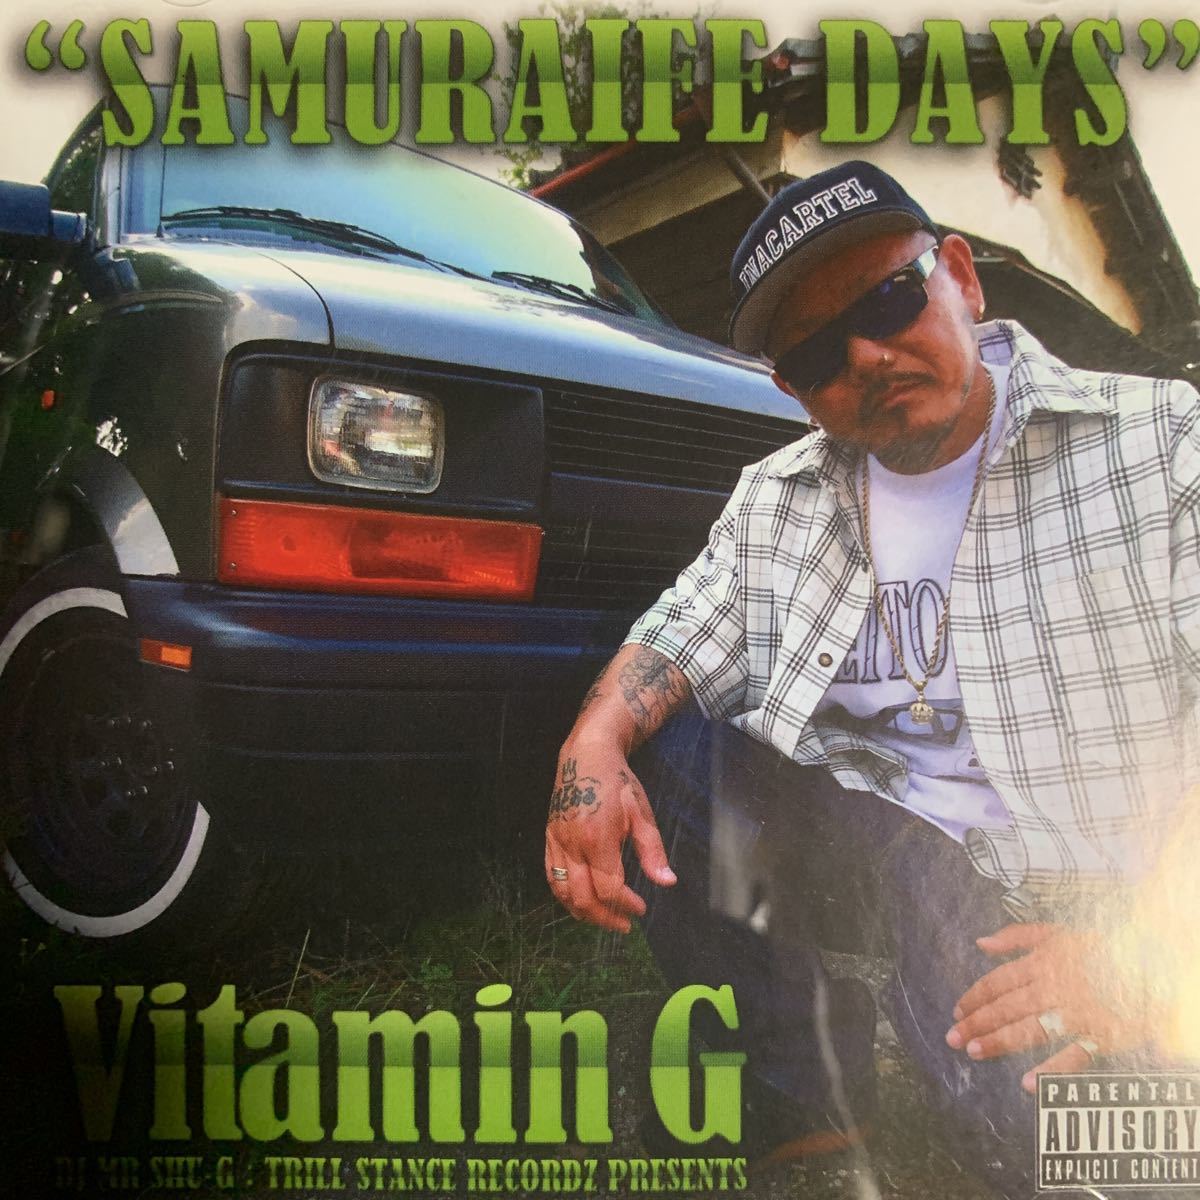 ヤフオク! - G-RAP MIX DJ MR.SHU-G 『Vitamin G vol.7 SAMUR...